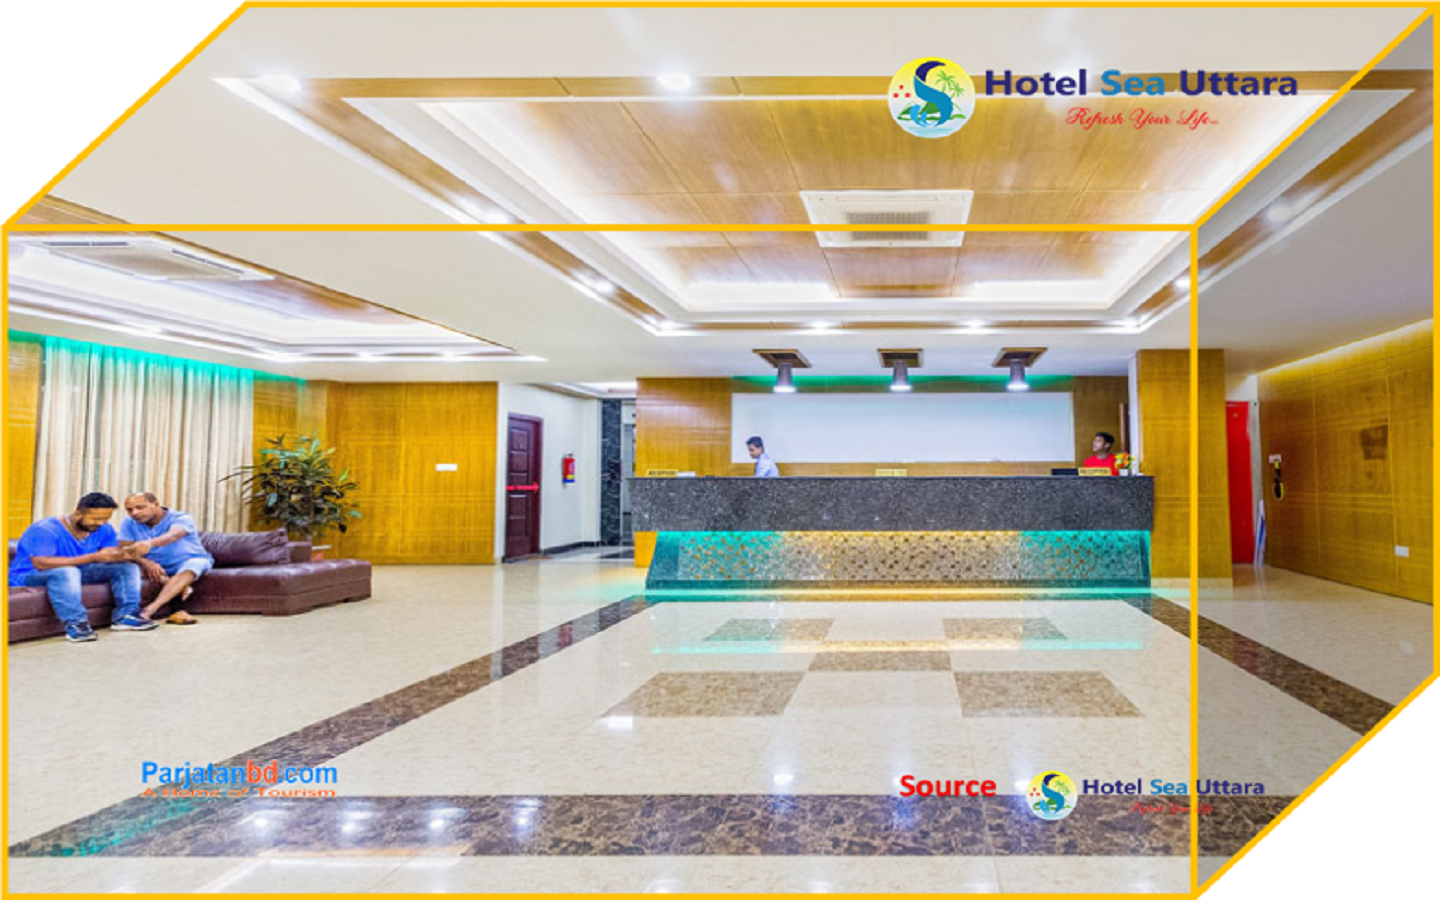 Hotel Sea Uttara Picture-2